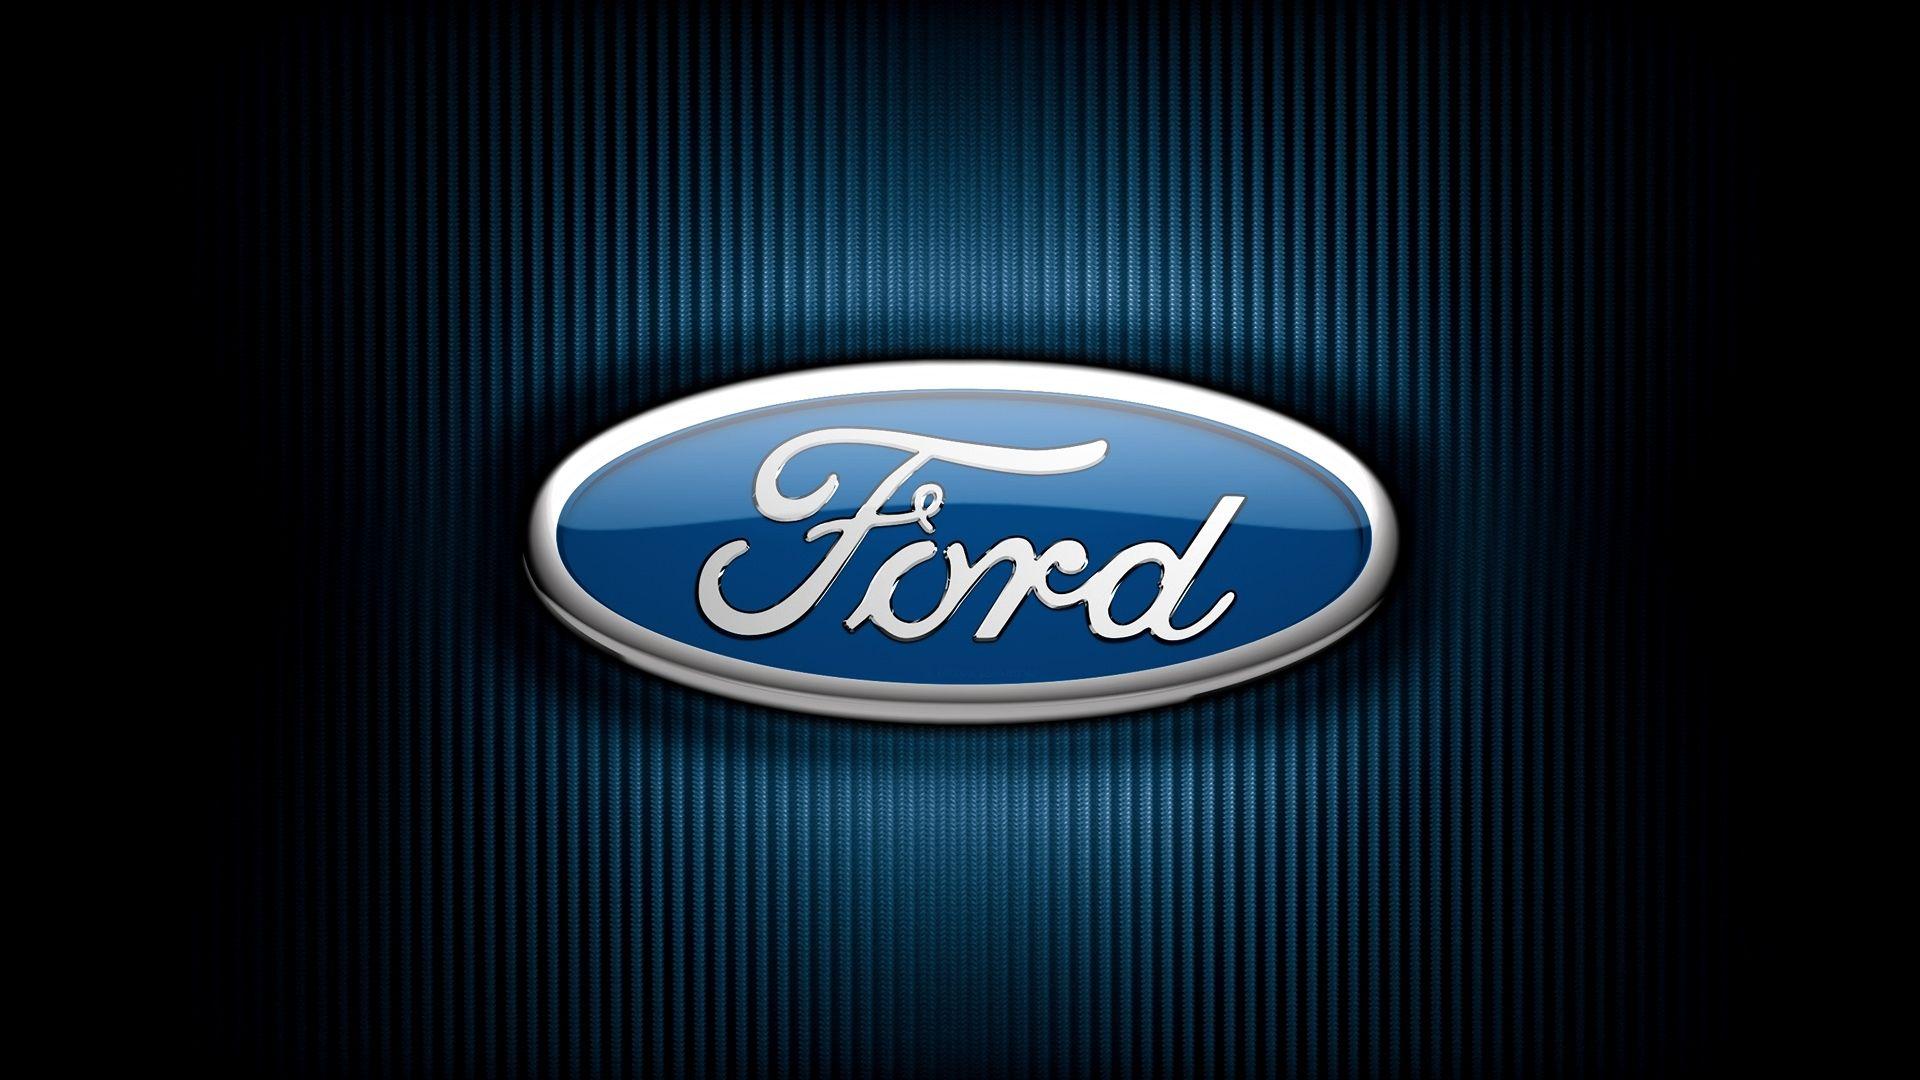 ford logo wallpaper 1920 X 1080. Ford Logo. Ford motor